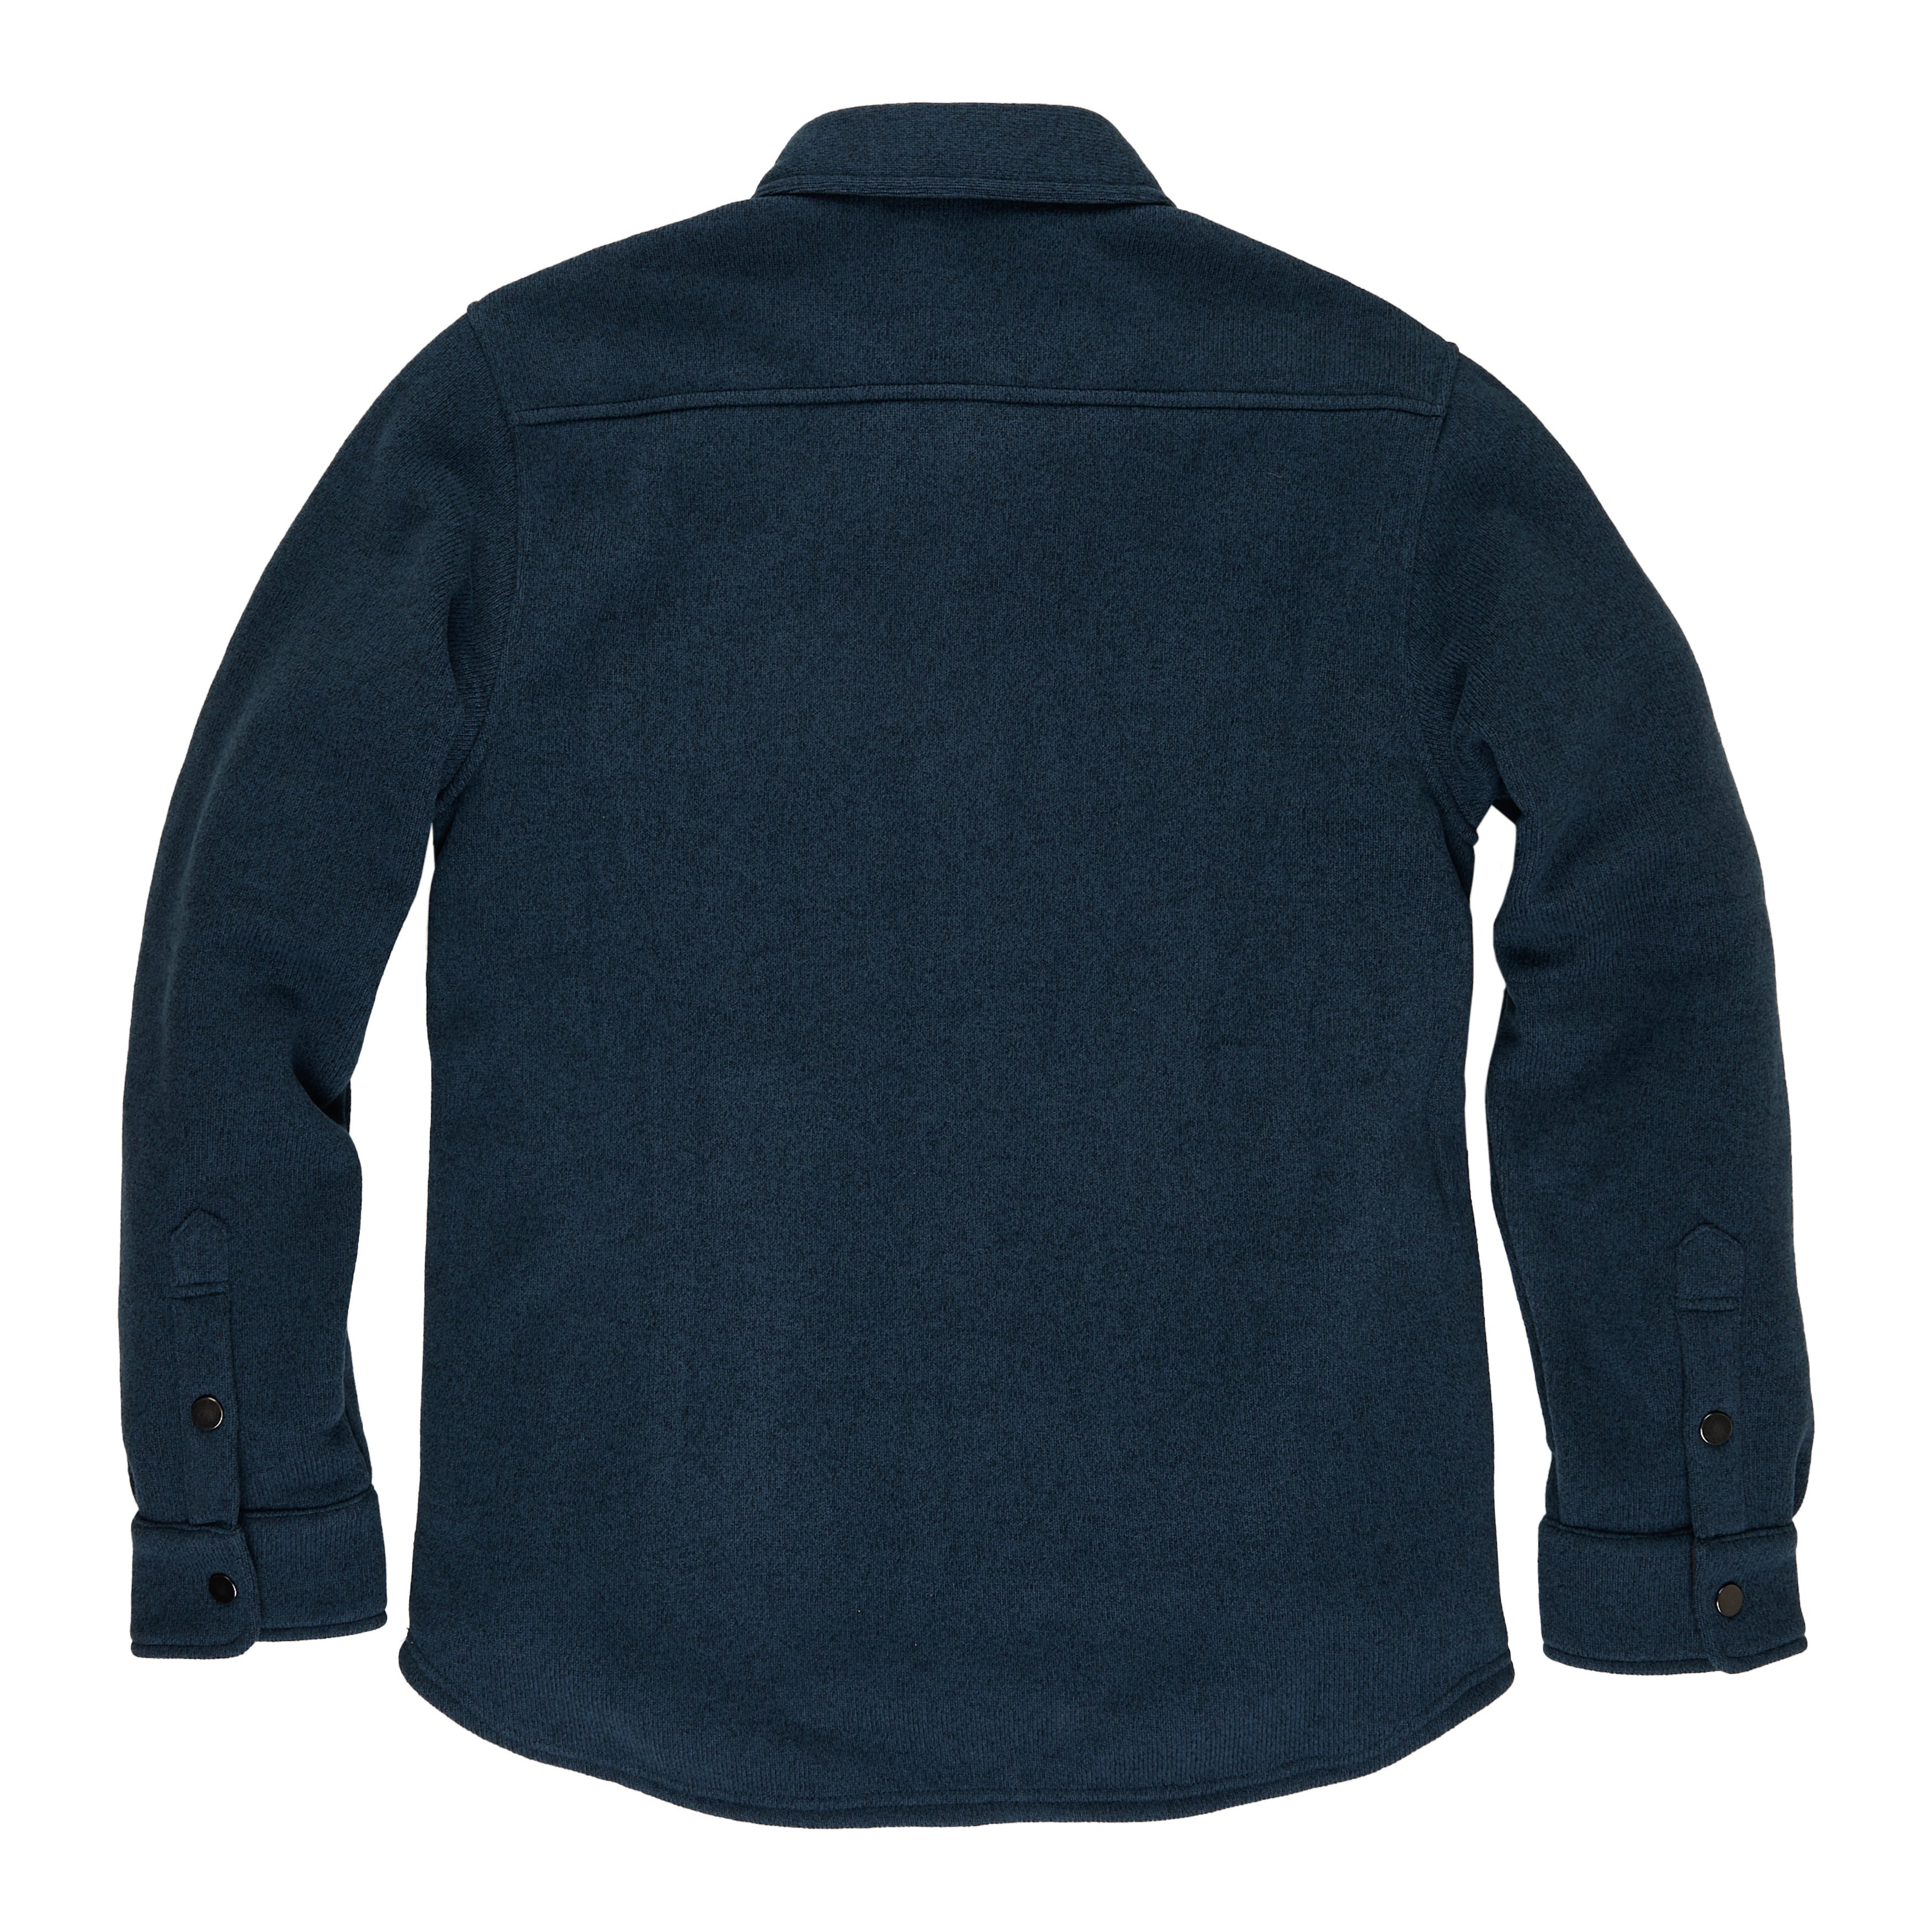 North Coast Shirt Jacket – Edgevale